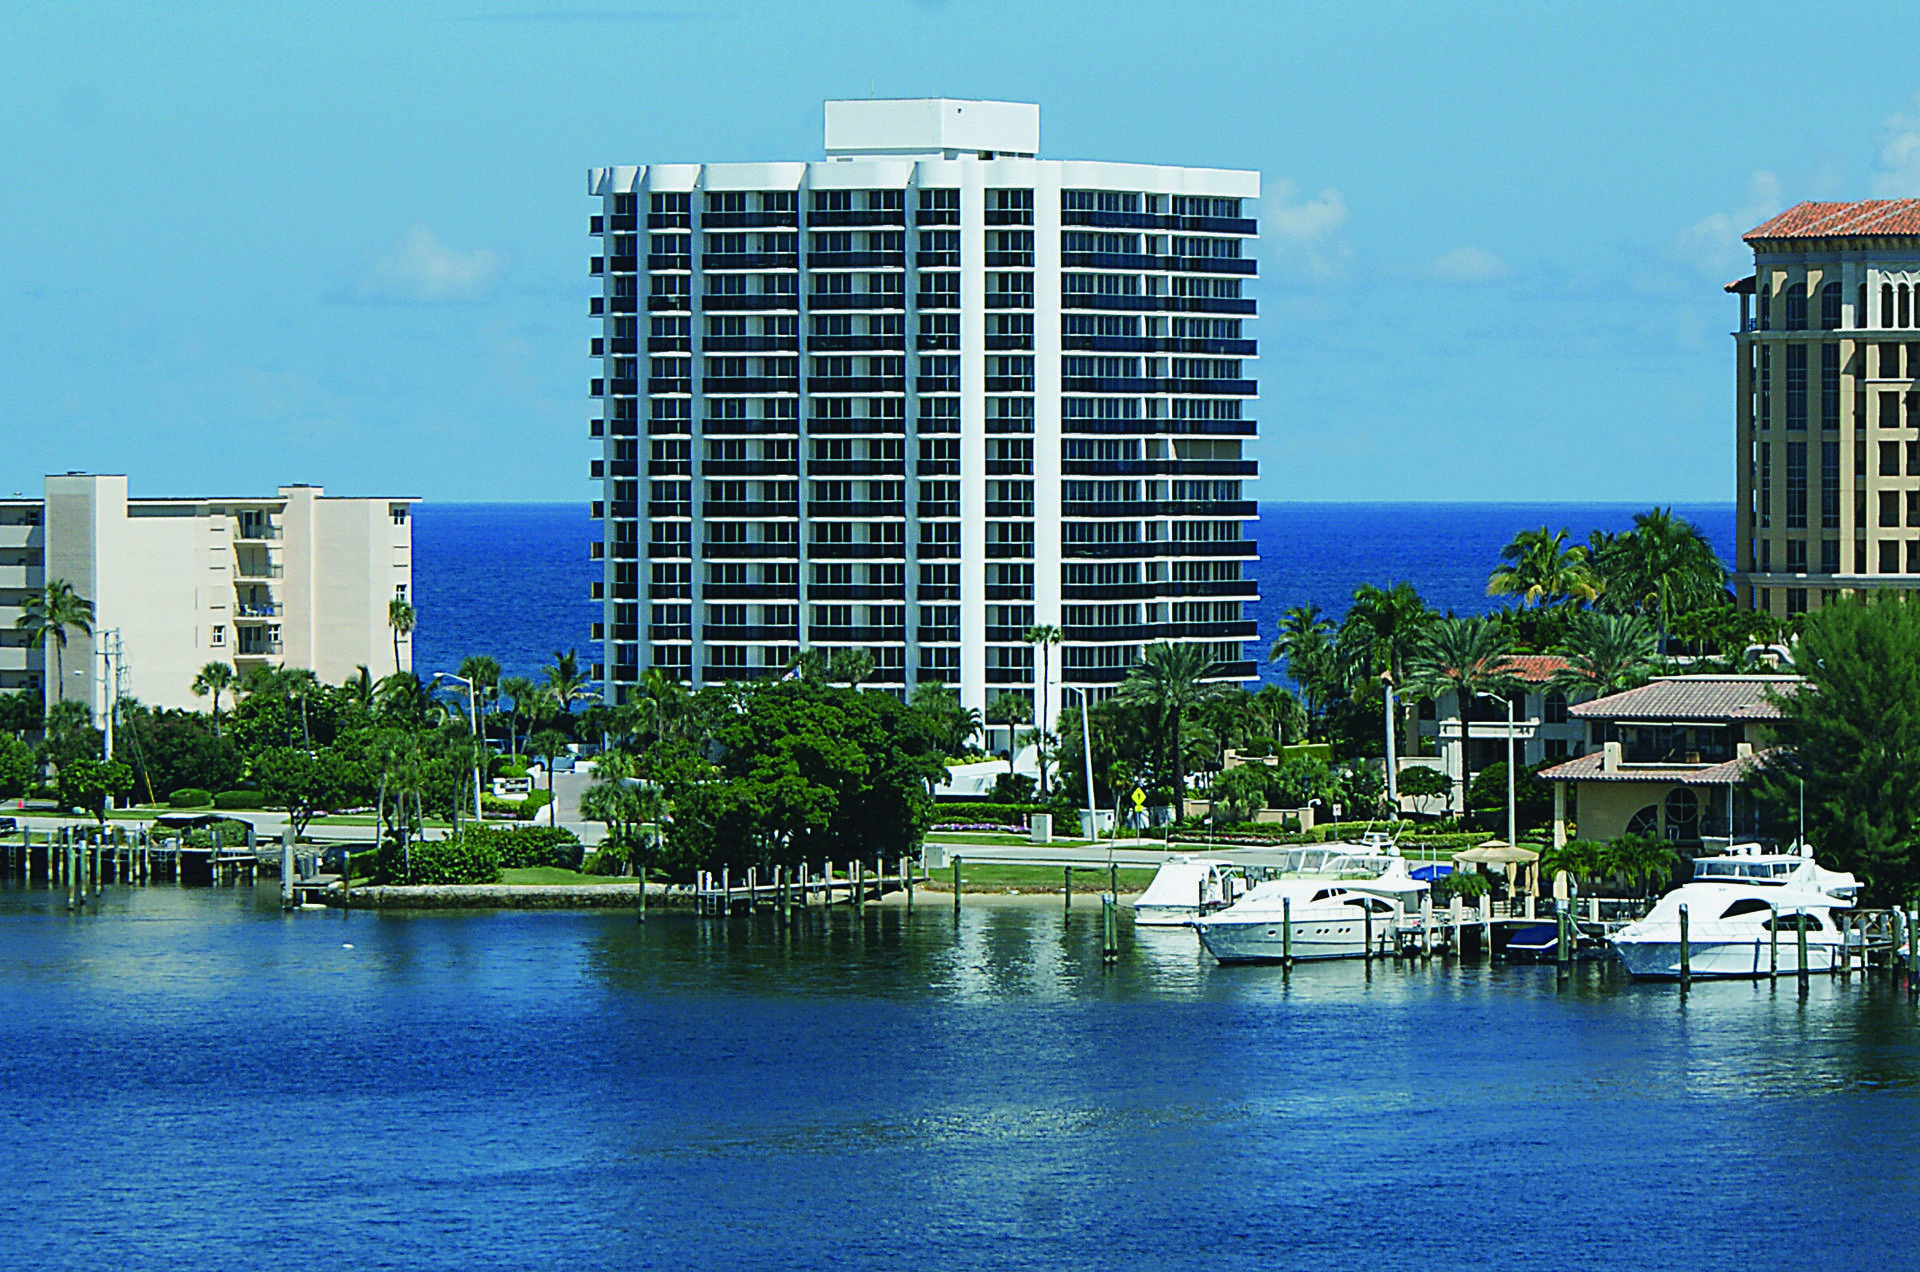 Property for Sale at 350 S Ocean Boulevard 9-C, Boca Raton, Palm Beach County, Florida - Bedrooms: 3 
Bathrooms: 3  - $2,325,000